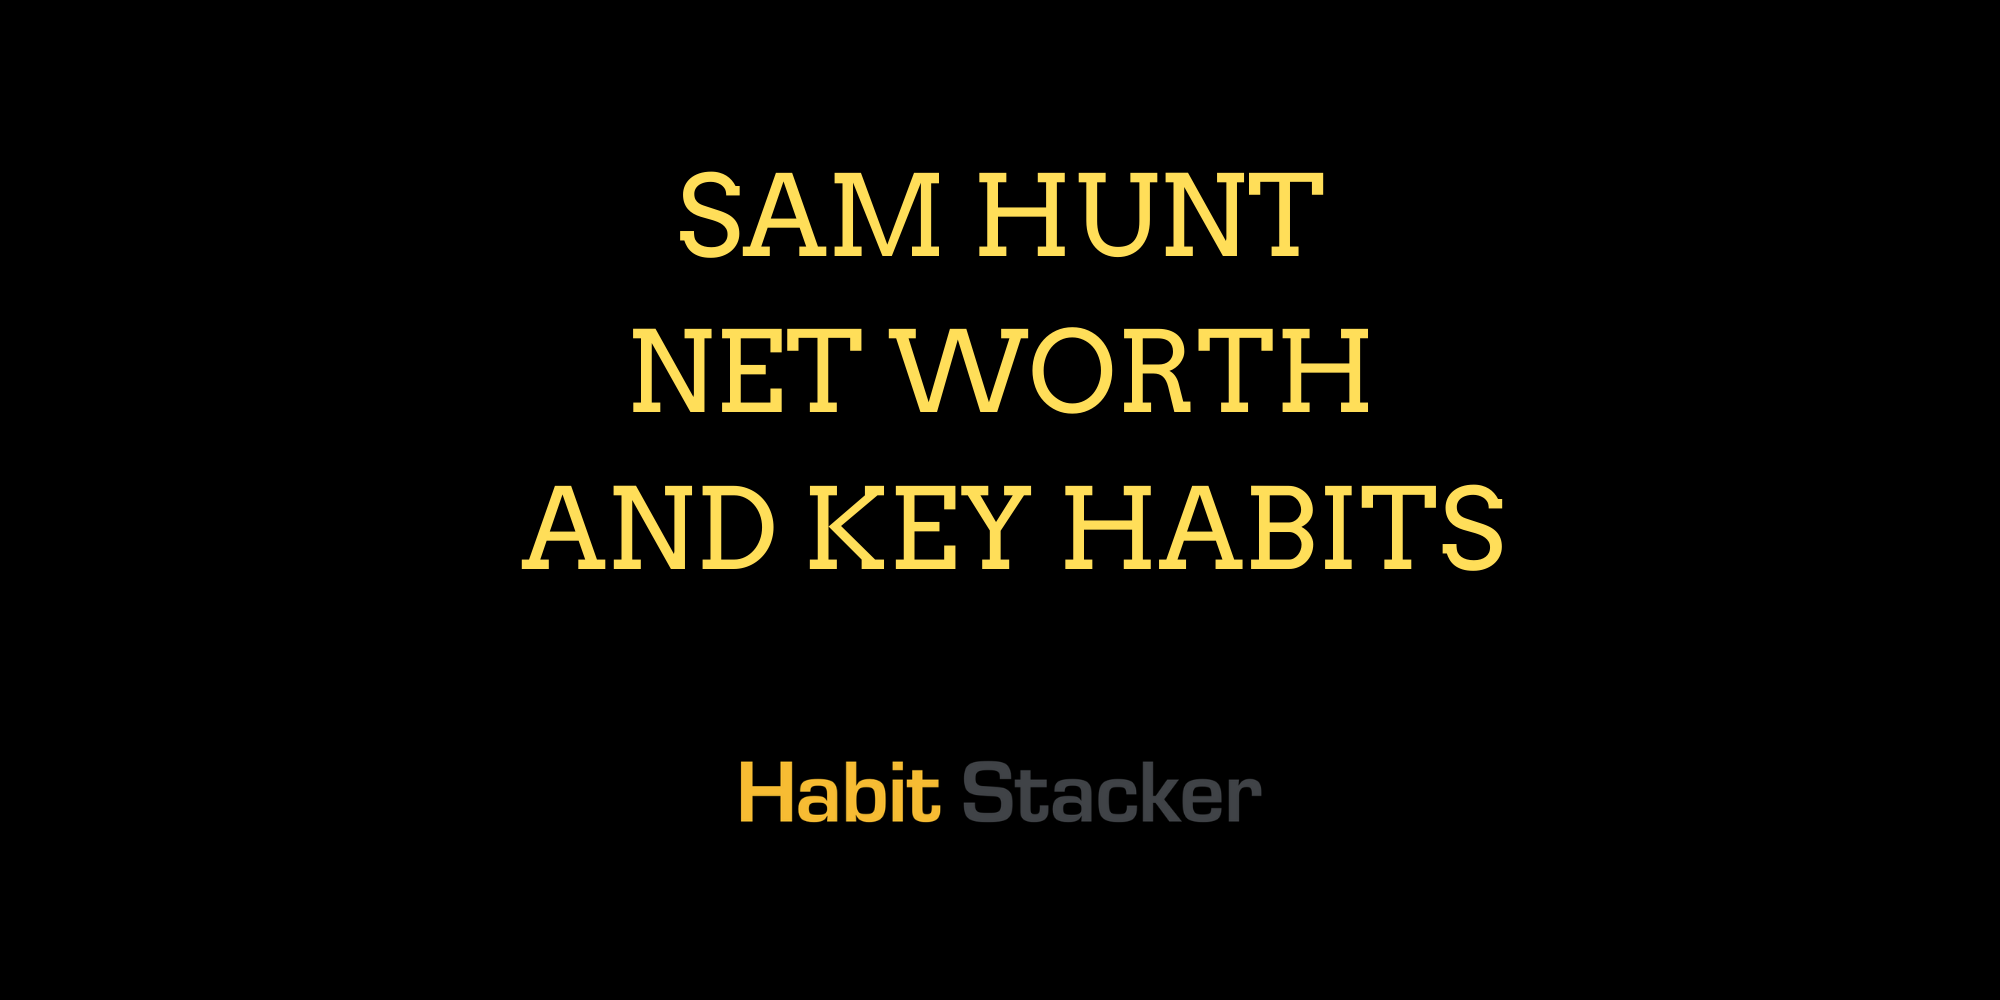 Sam Hunt Net Worth and Key Habits